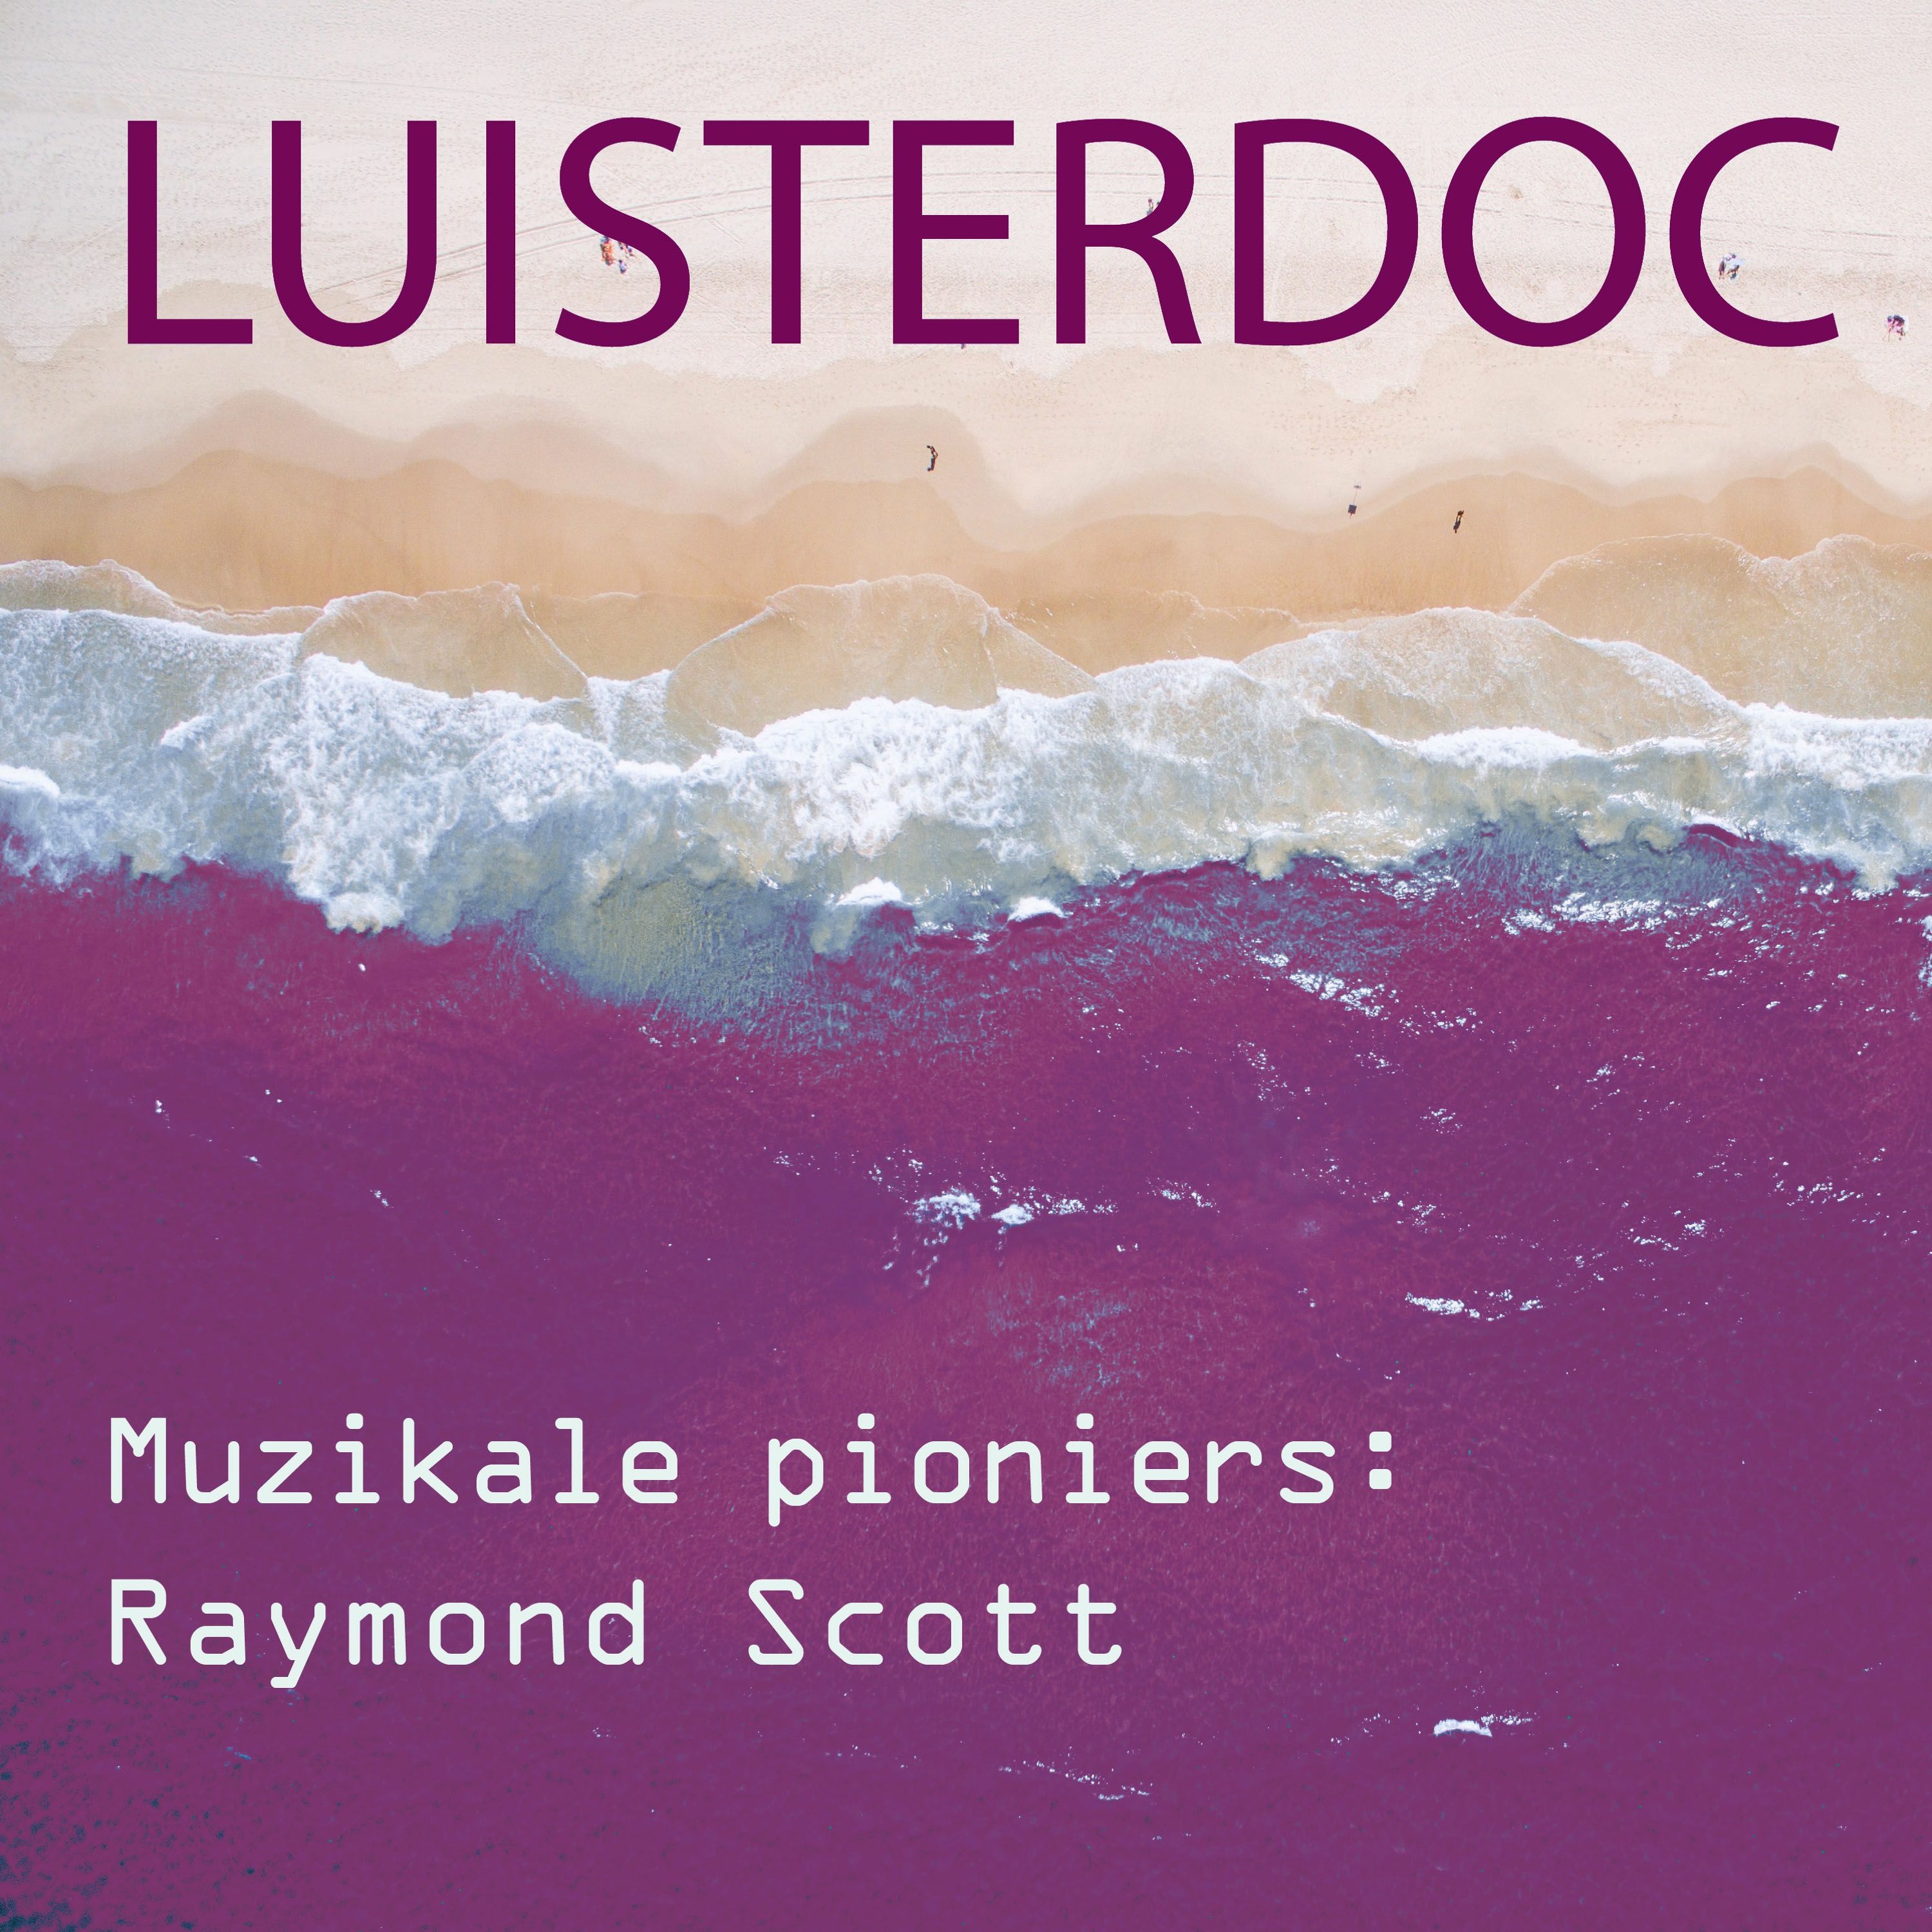 Muzikale pioniers: Raymond Scott